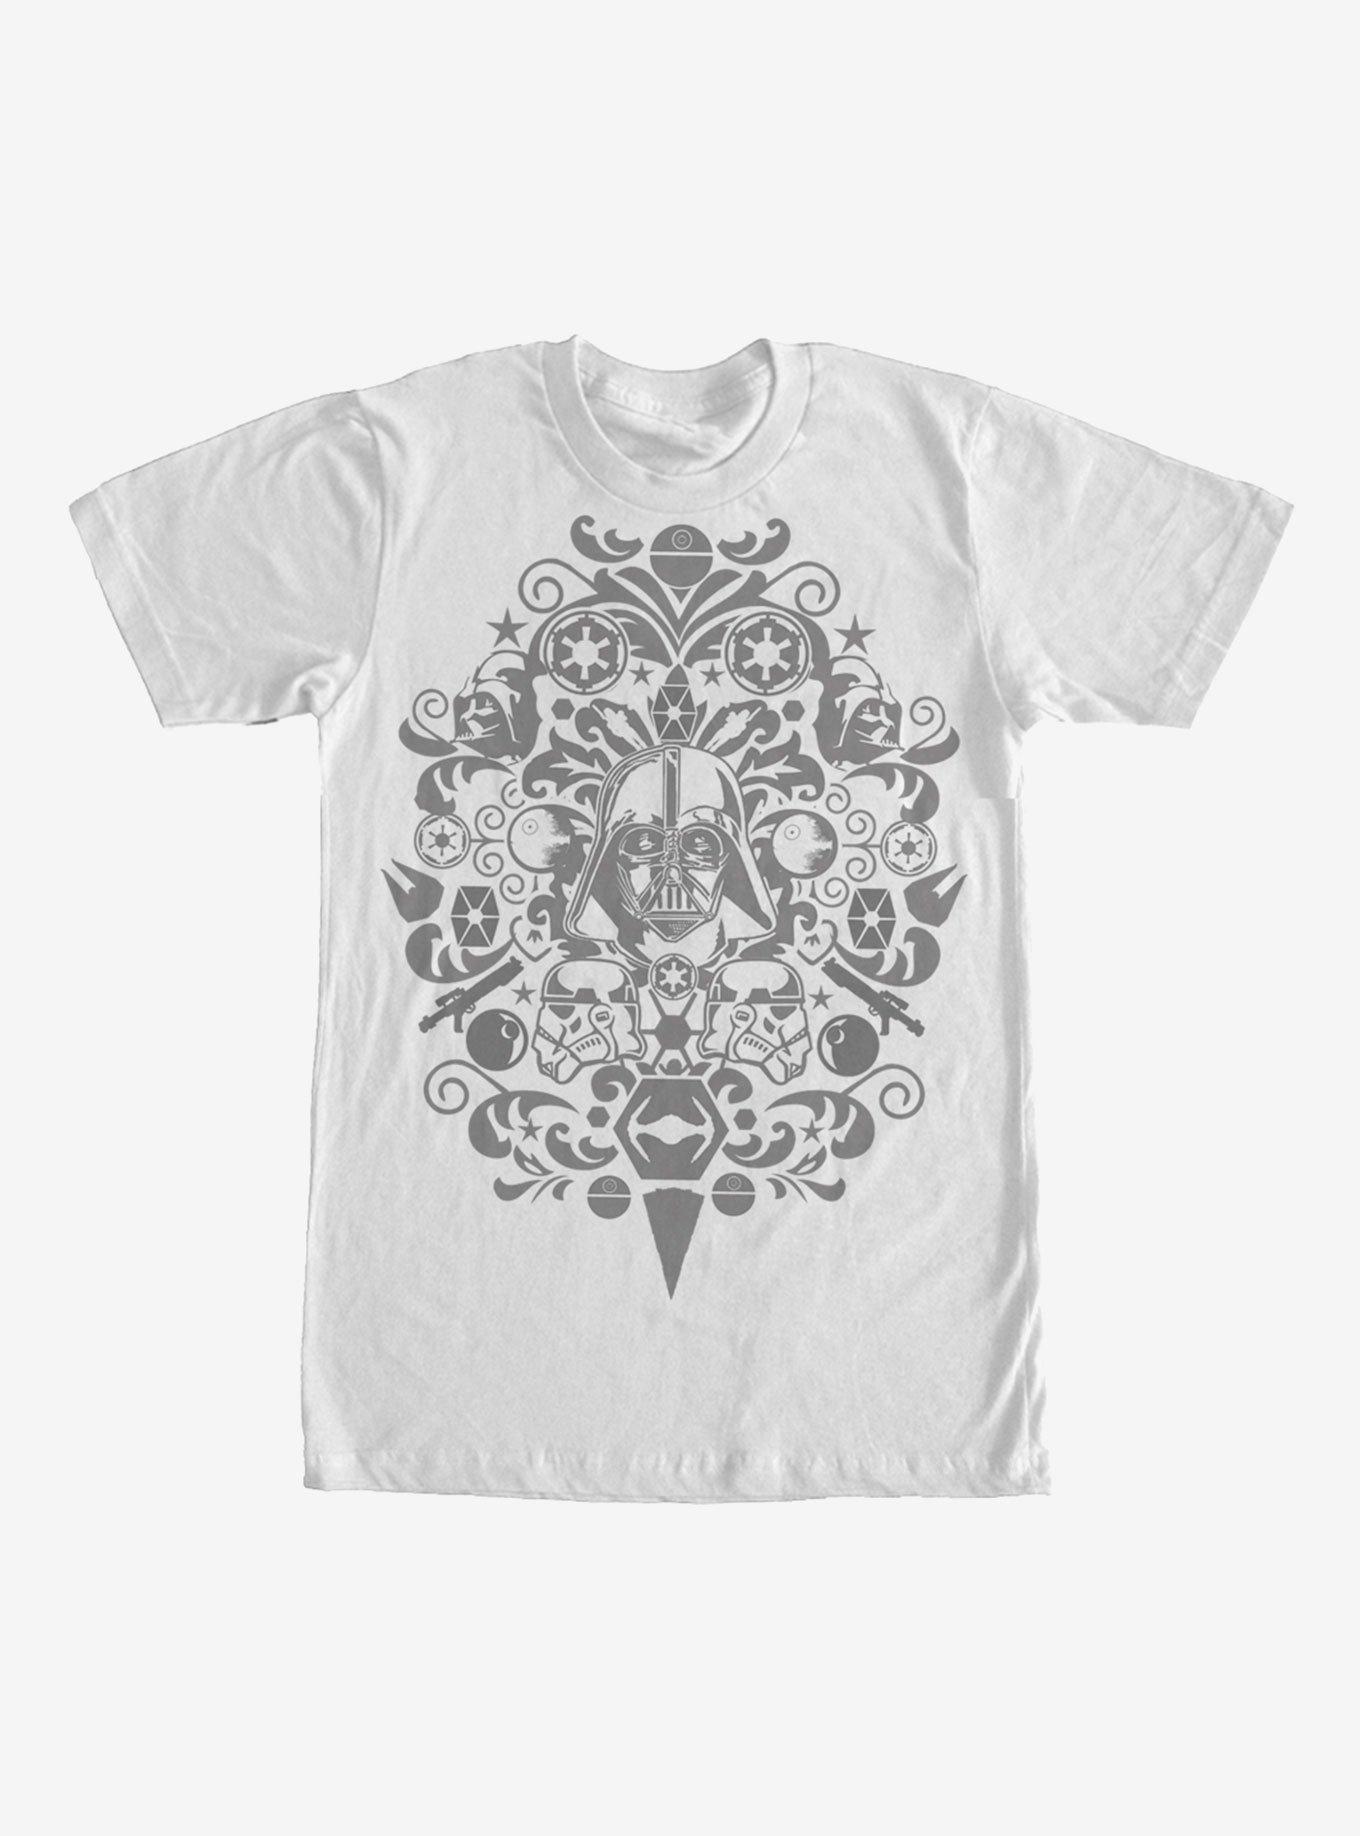 Star Wars Ornate Darth Vader Pattern T-Shirt - WHITE | BoxLunch